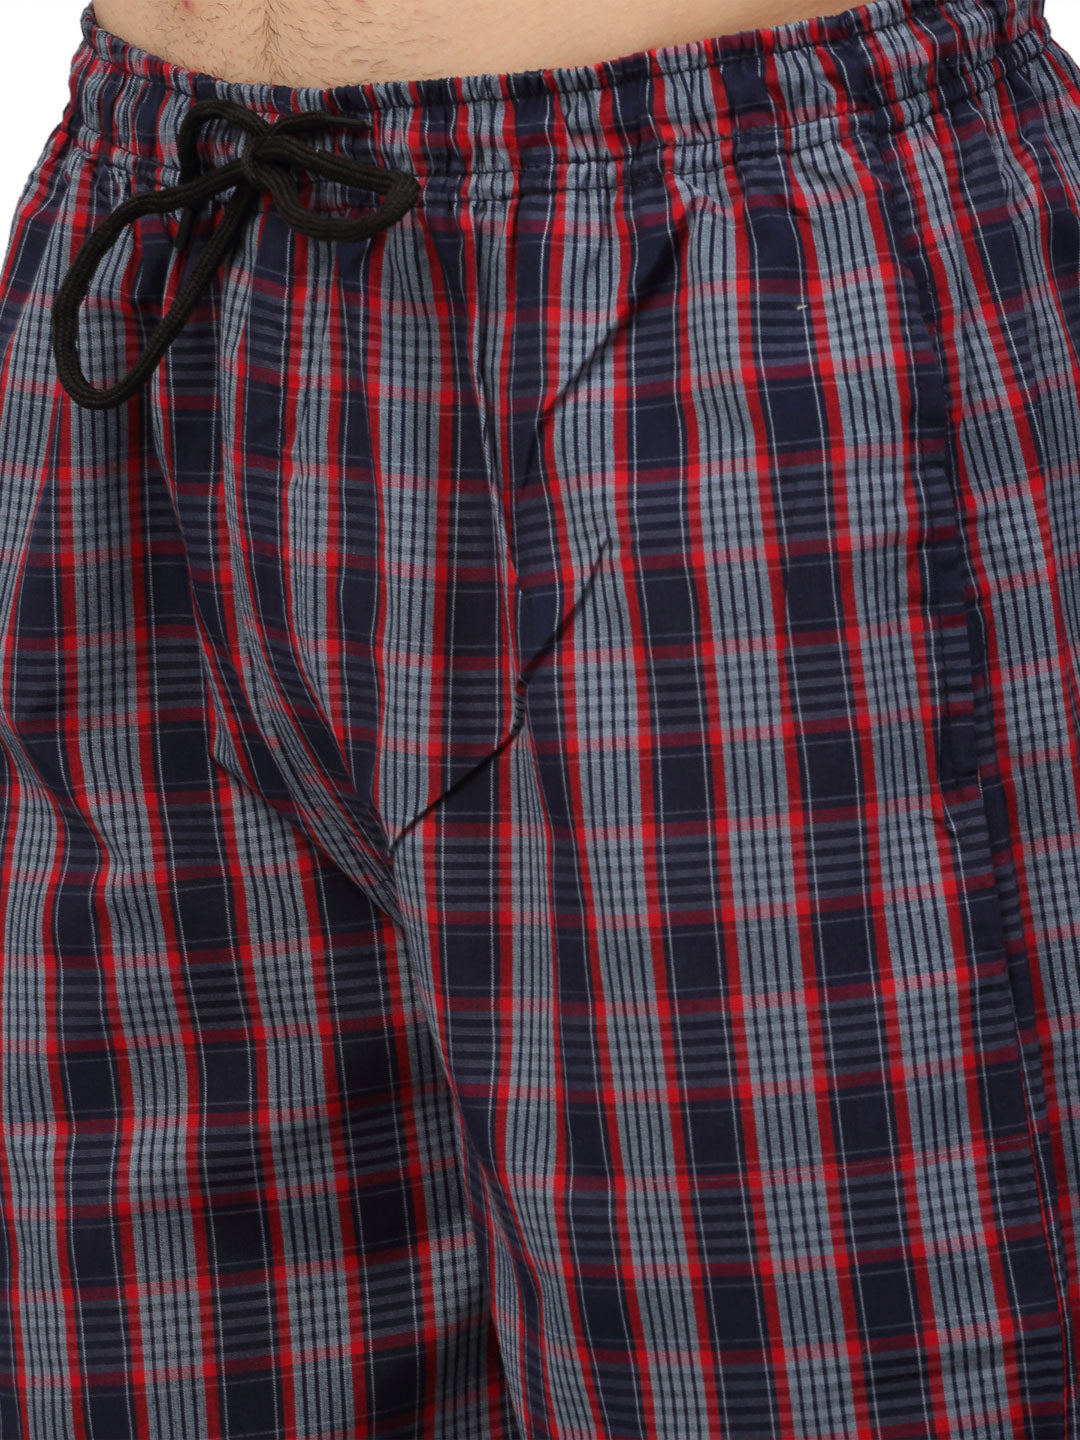 Men's Grey Cotton Checked Track Pants ( JOG 019Grey-Red ) - Jainish